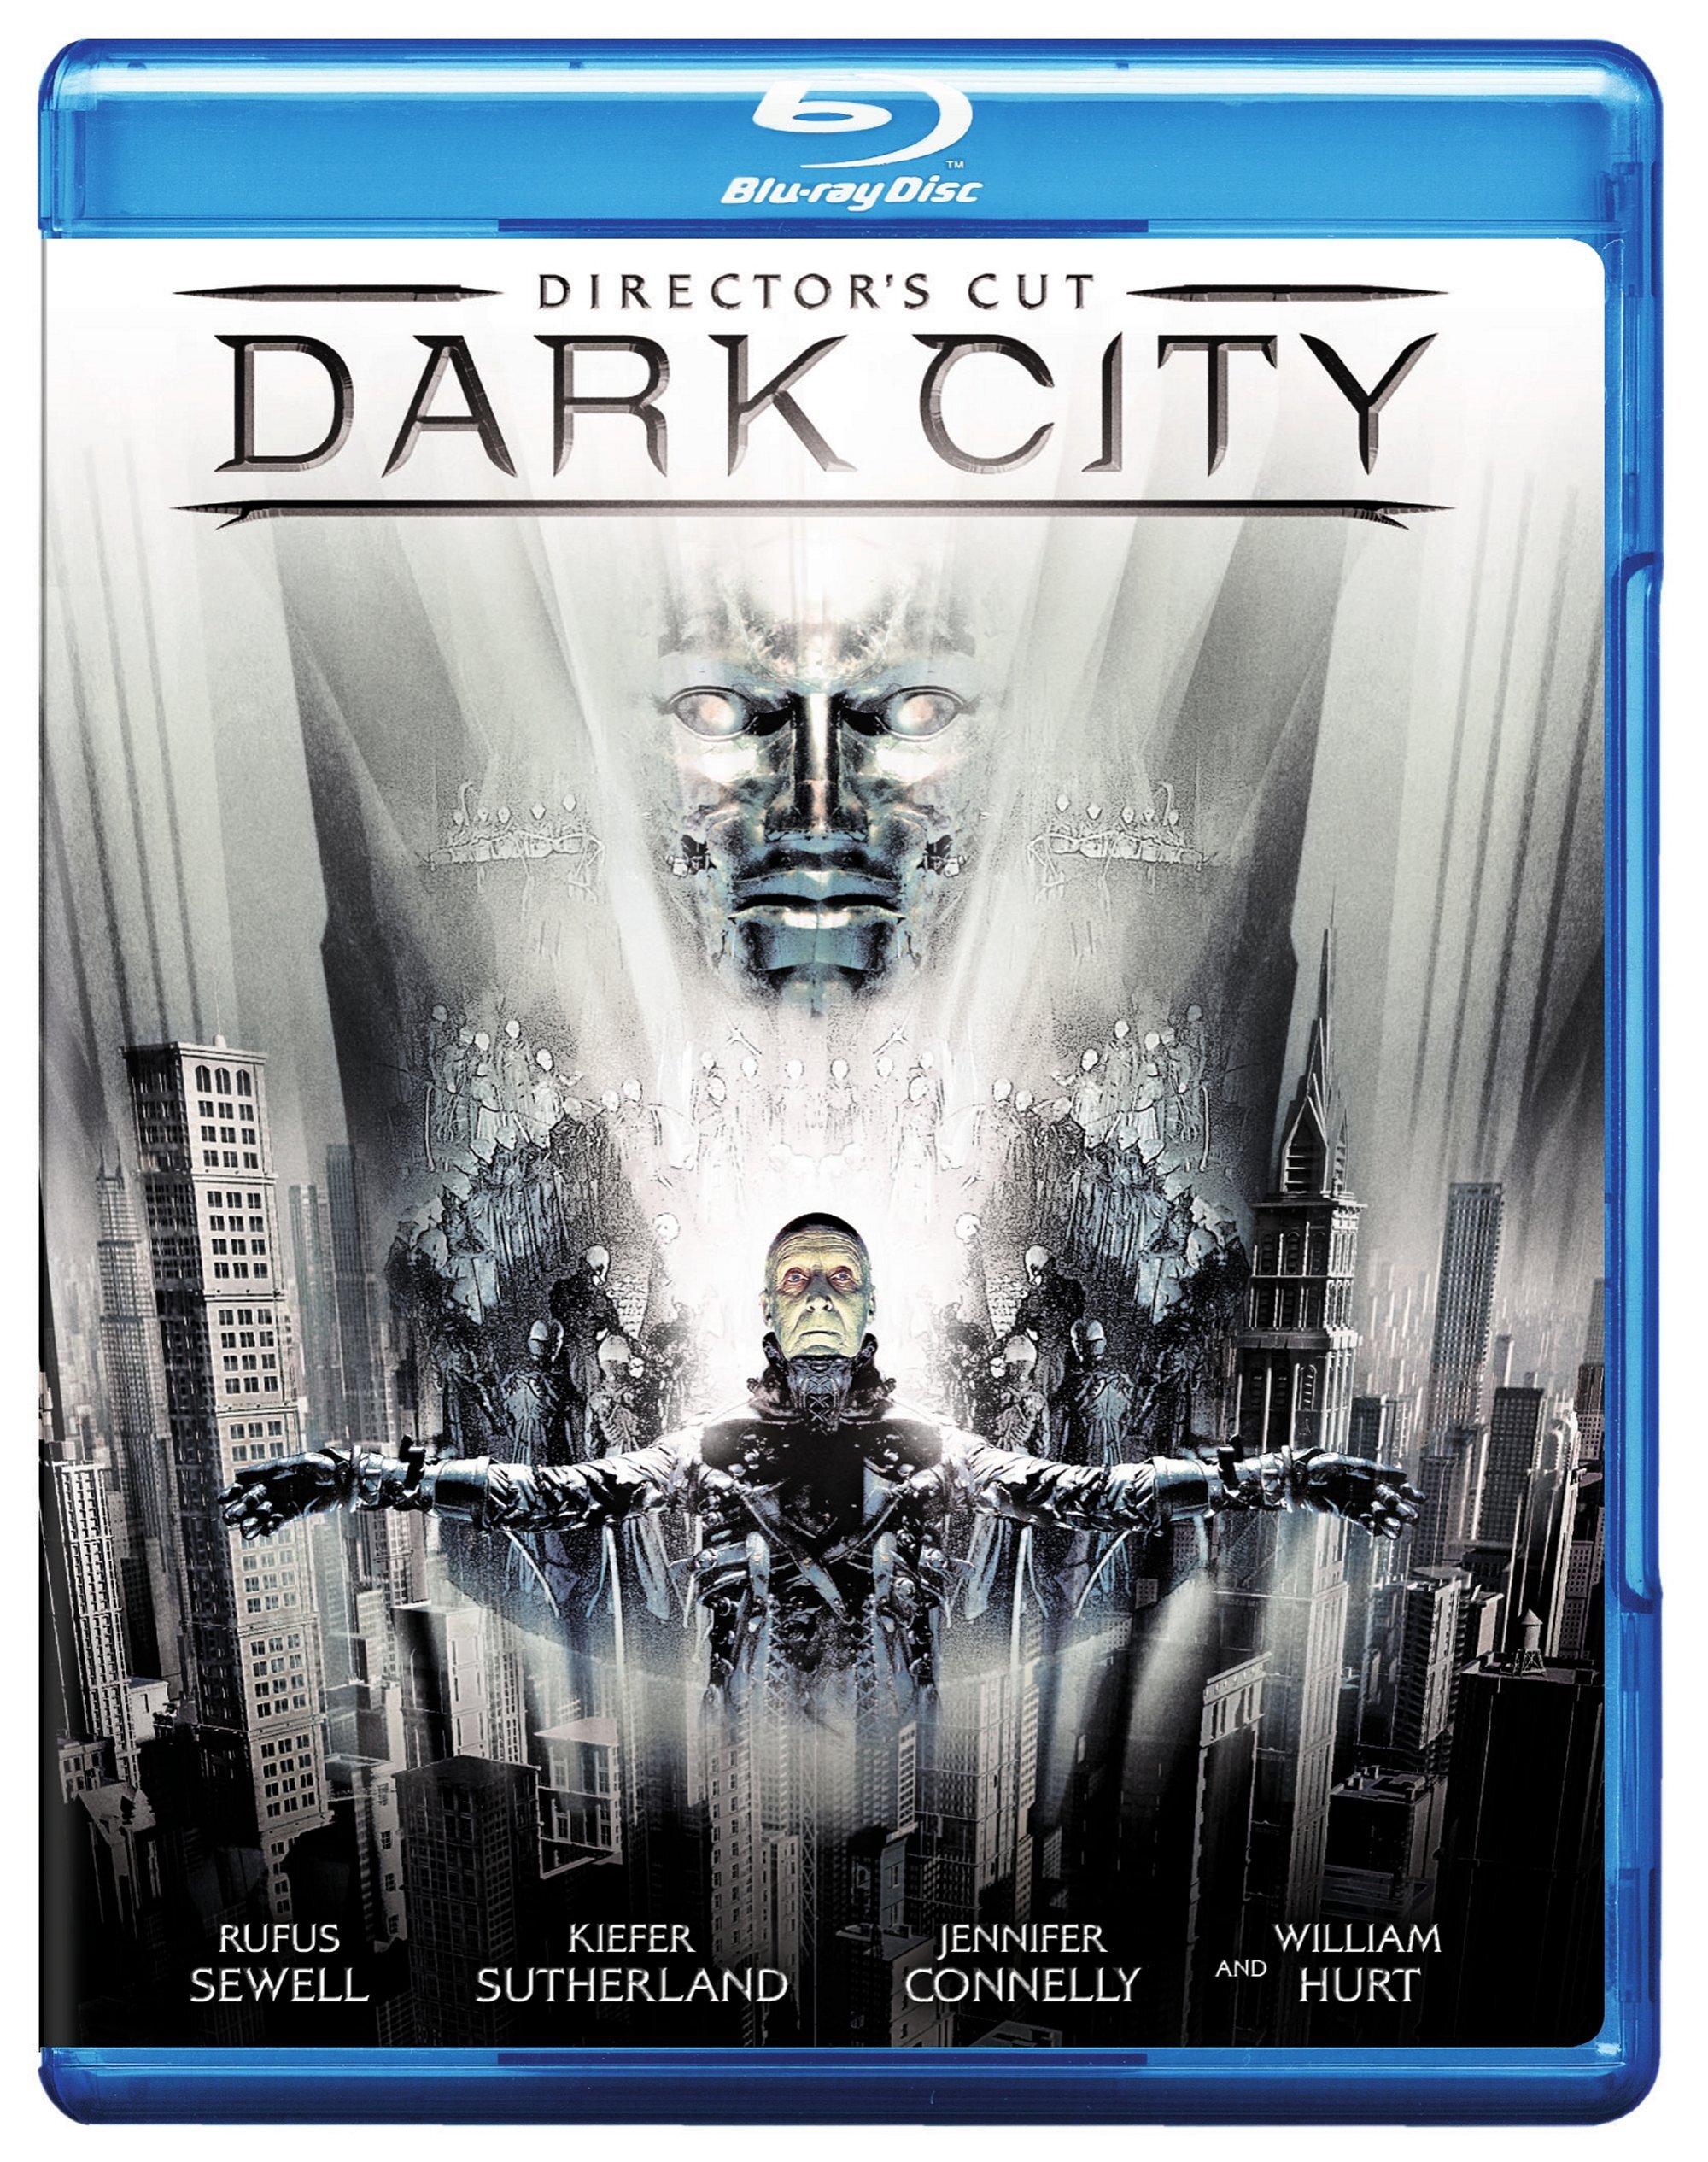 Dark City: Director's Cut (Blu-ray Director's Cut) - Blu-ray [ 1998 ]  - Sci Fi Movies On Blu-ray - Movies On GRUV